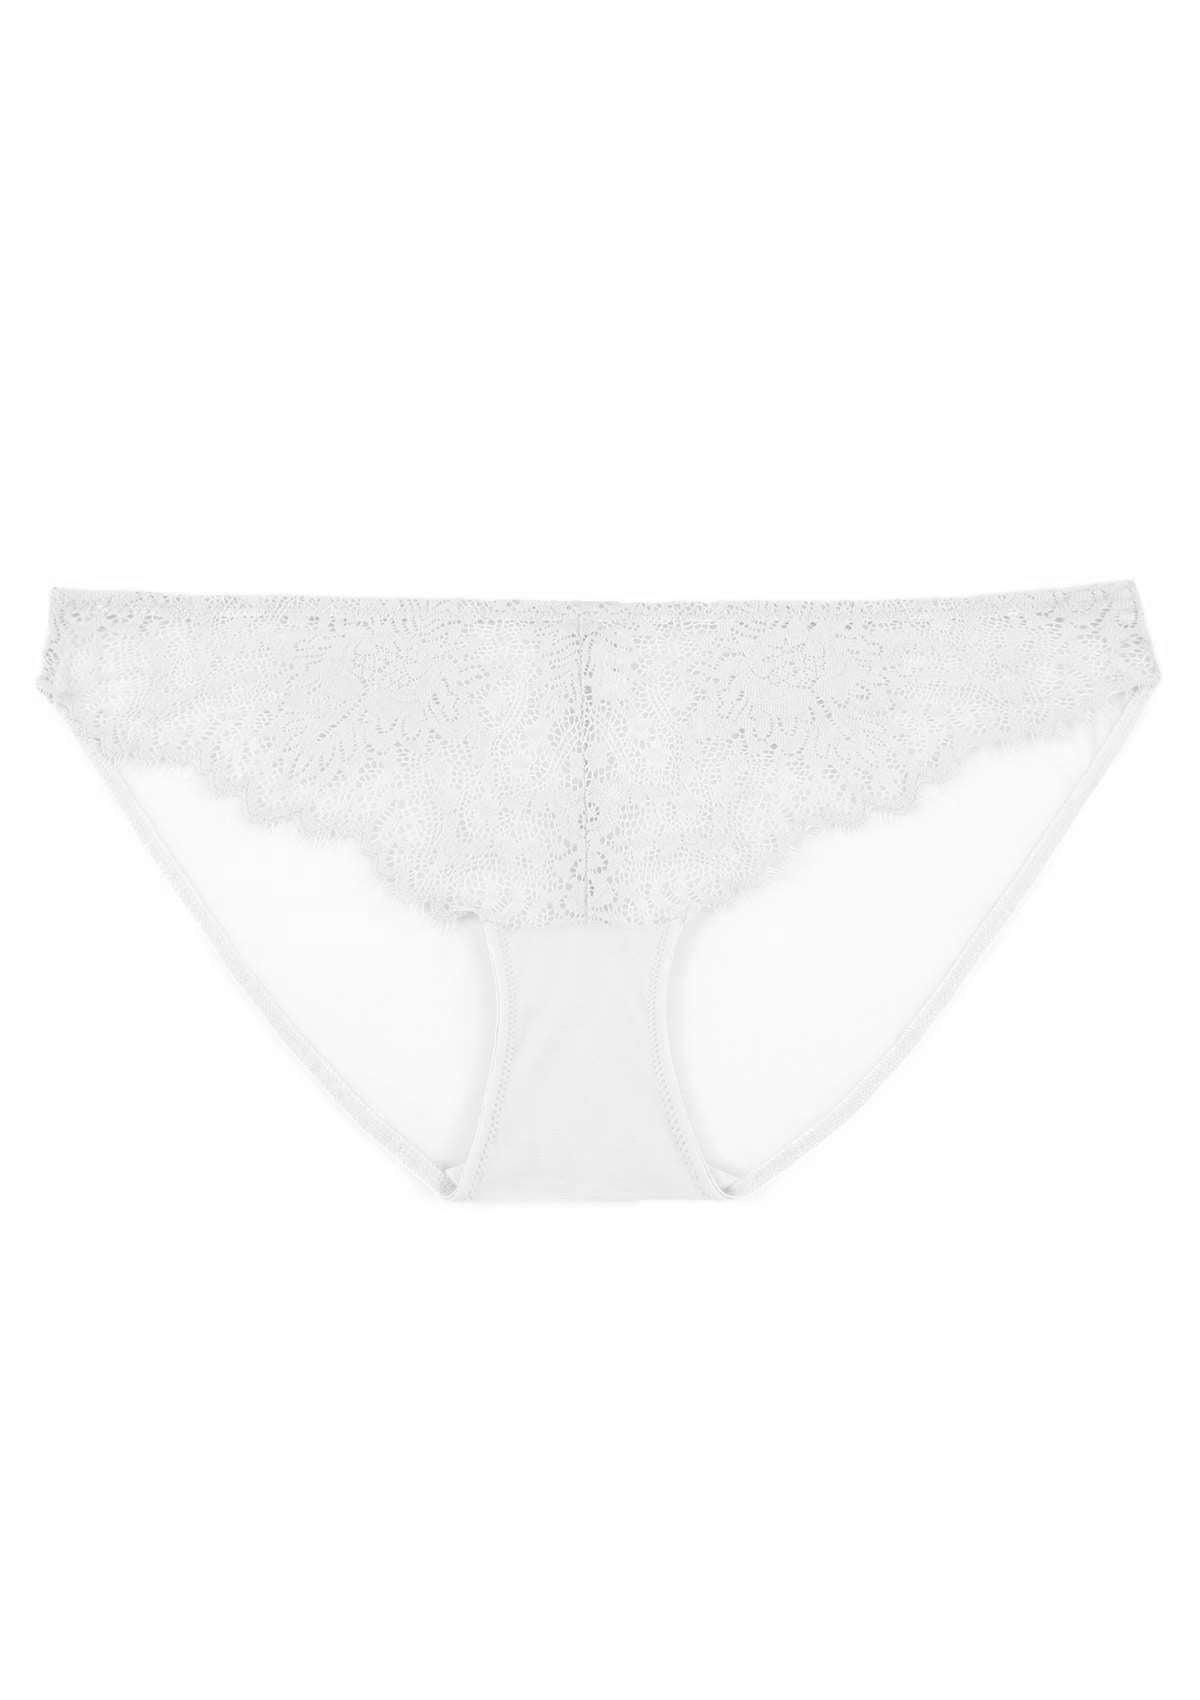 HSIA Sunflower Exquisite White Lace Bikini Underwear - XXXL / High-Rise Brief / White